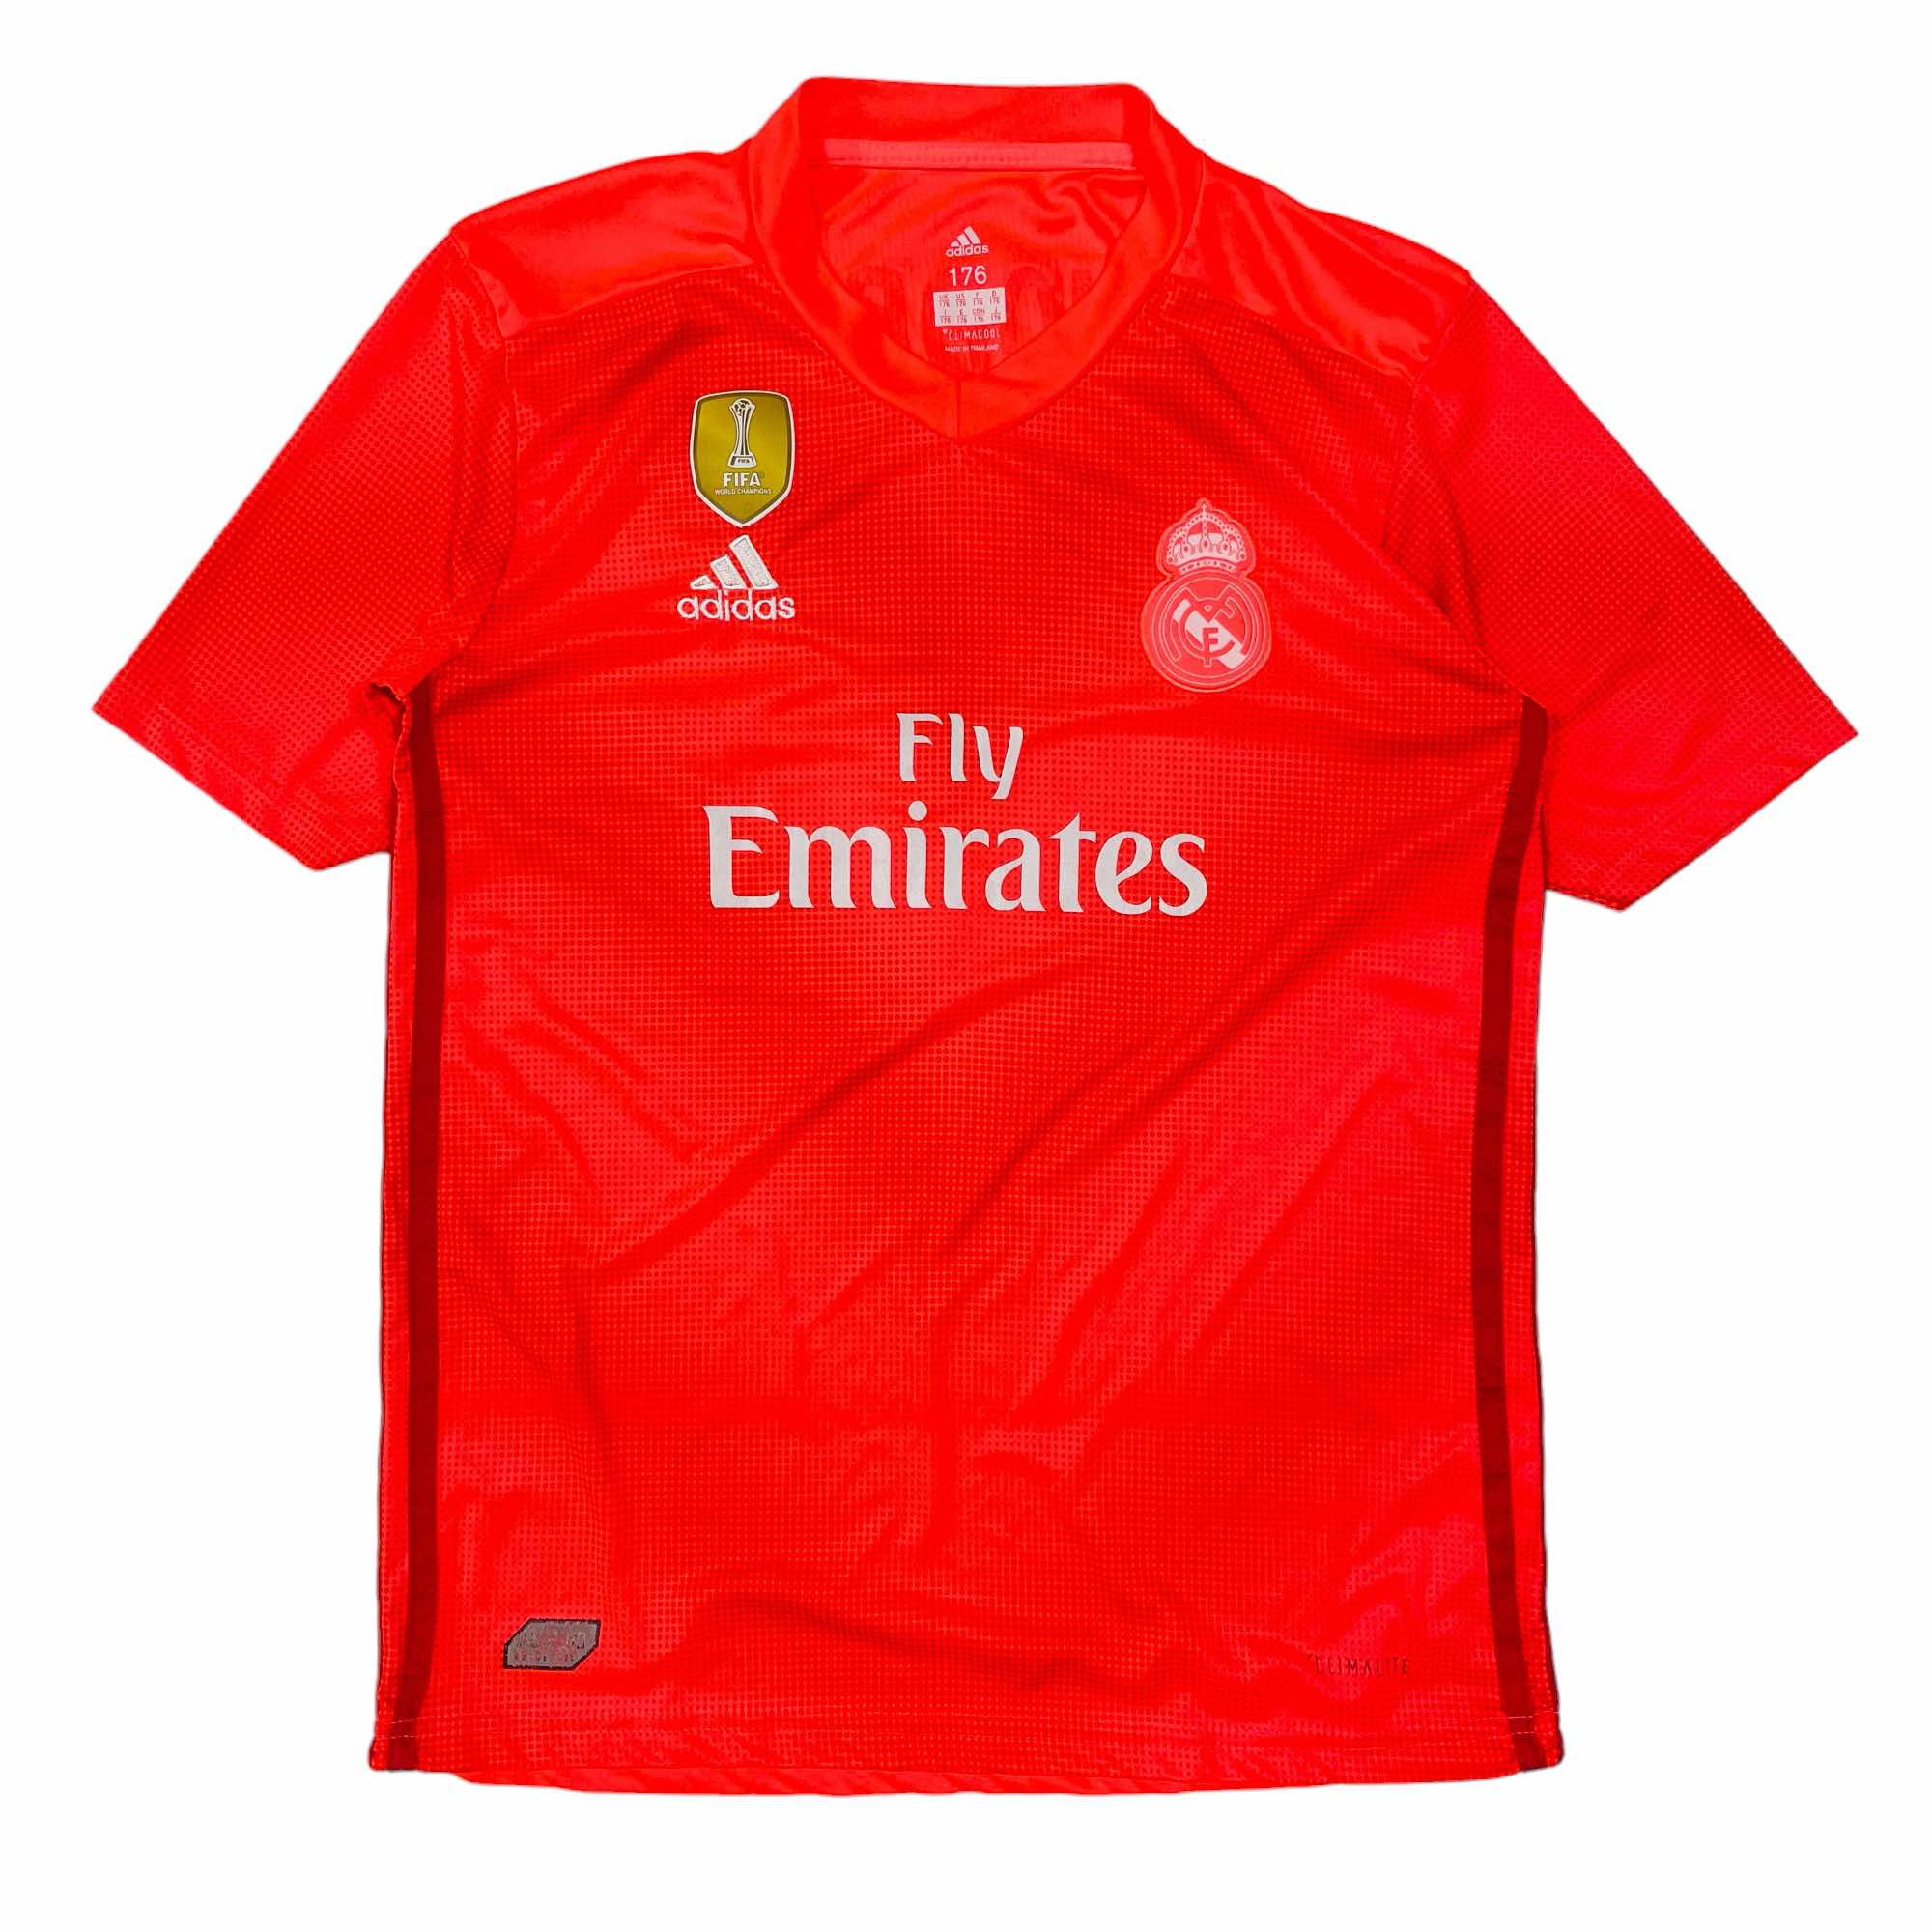 Real Madrid 2018/19 Nike Luka Modric Shirt - Small